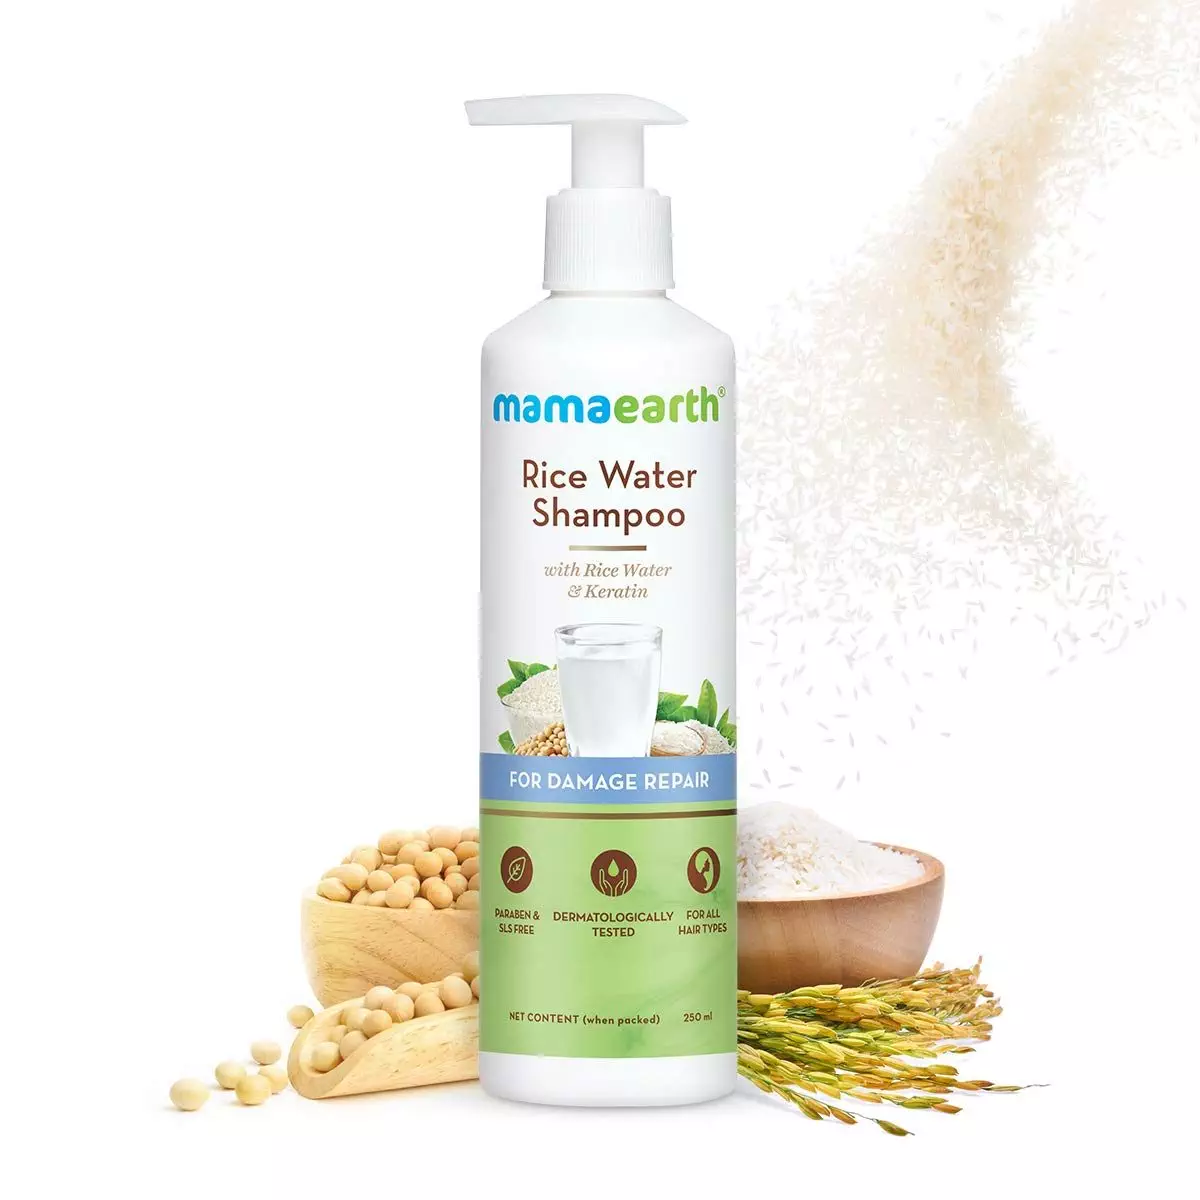 Mamaearth Rice Water Shampoo Review 13